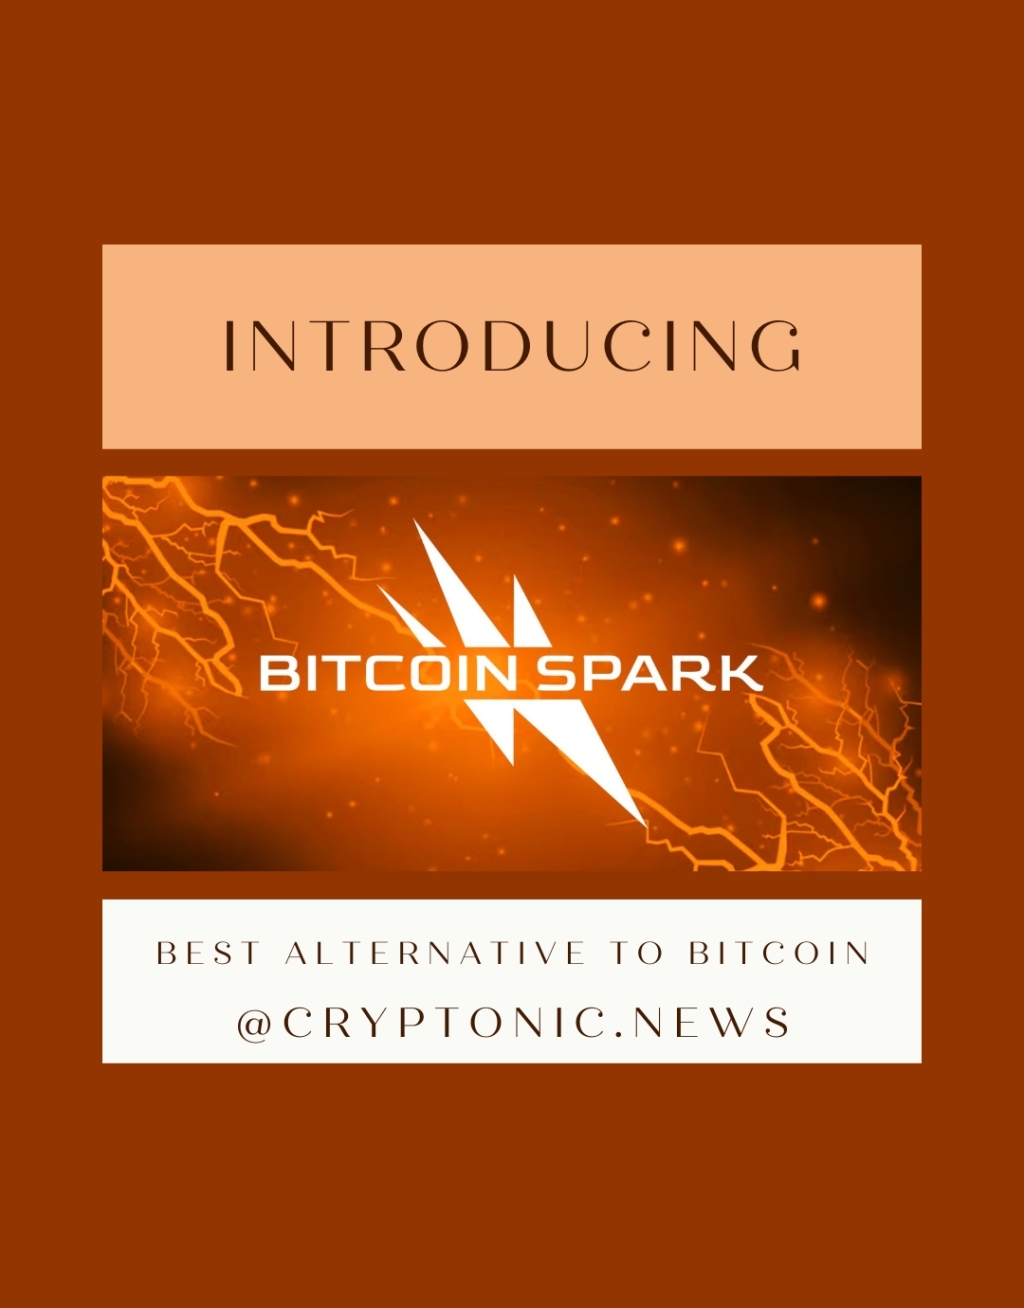 Bitcoin Spark: The True Bitcoin Alternative